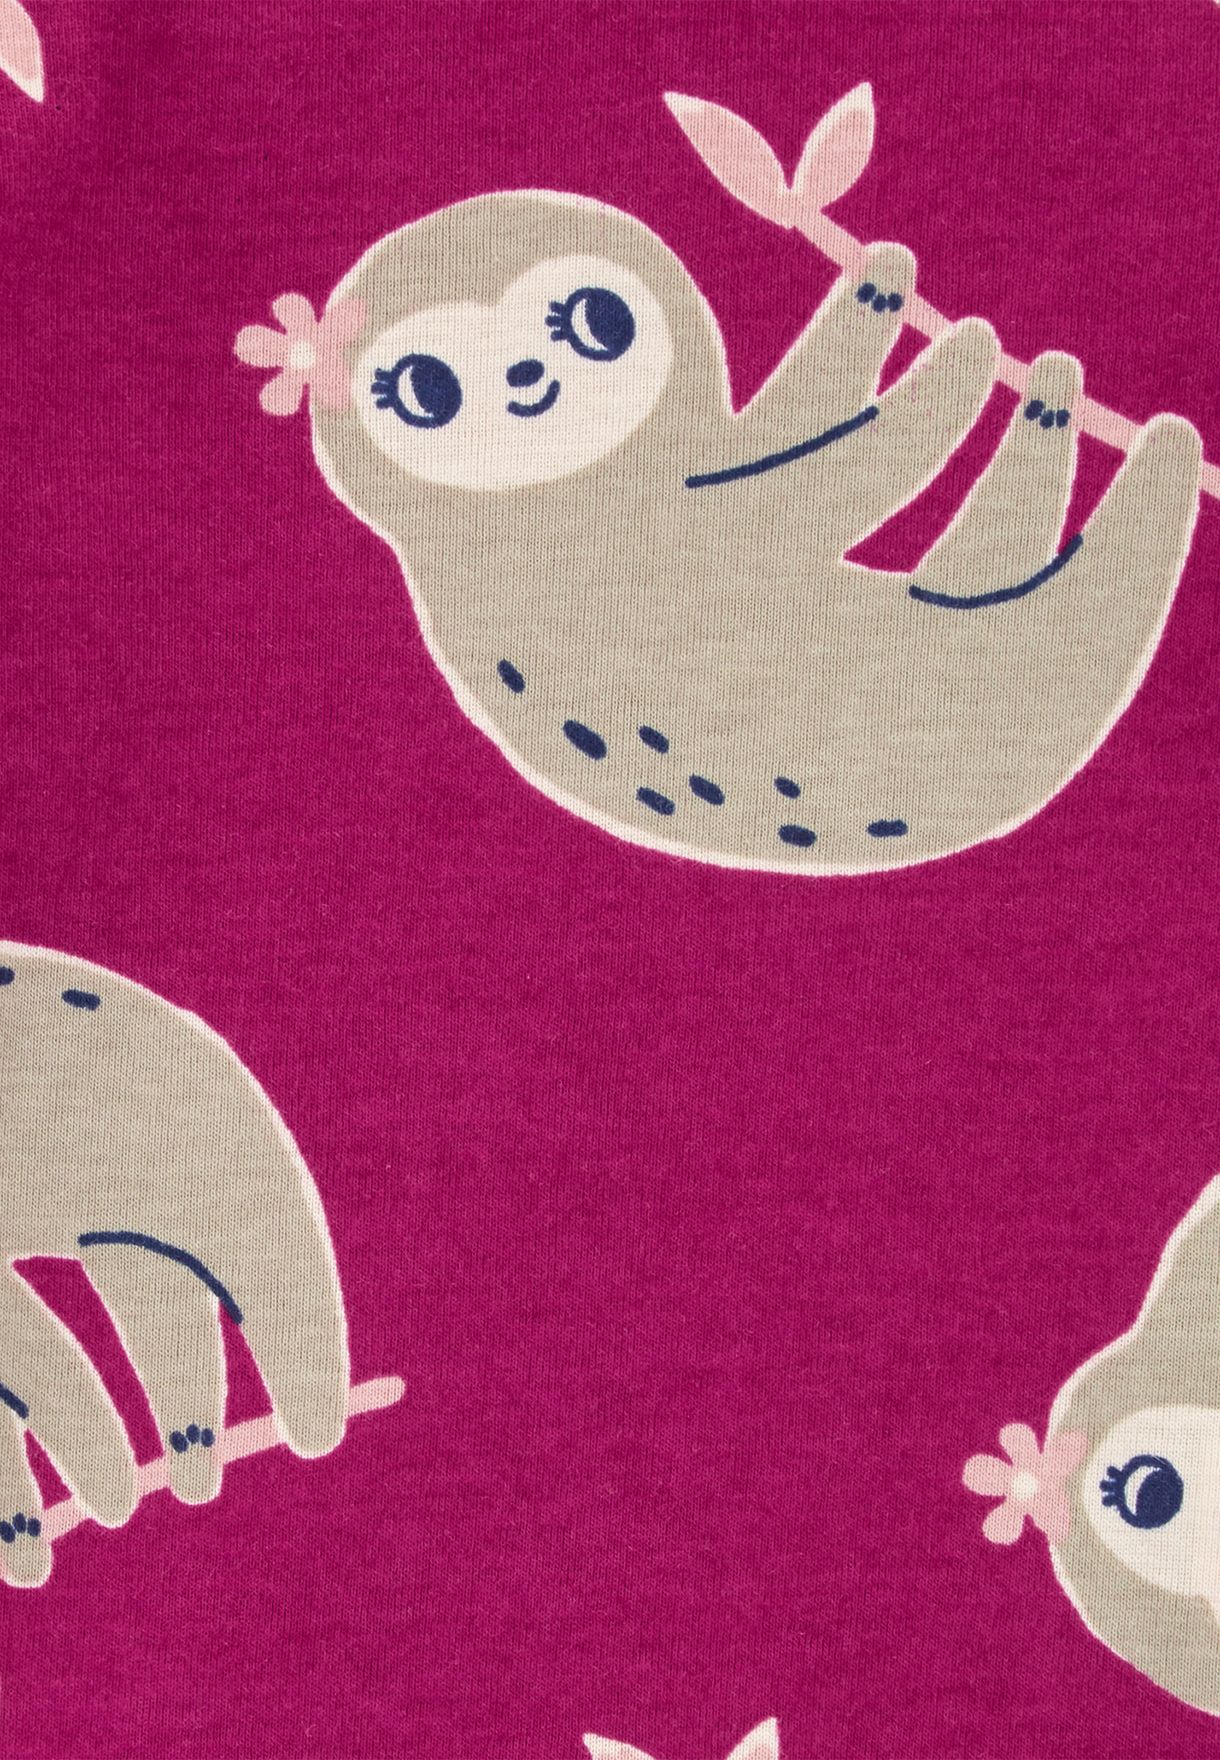 Infant 4 Piece Sloth Printed Pyjama Set